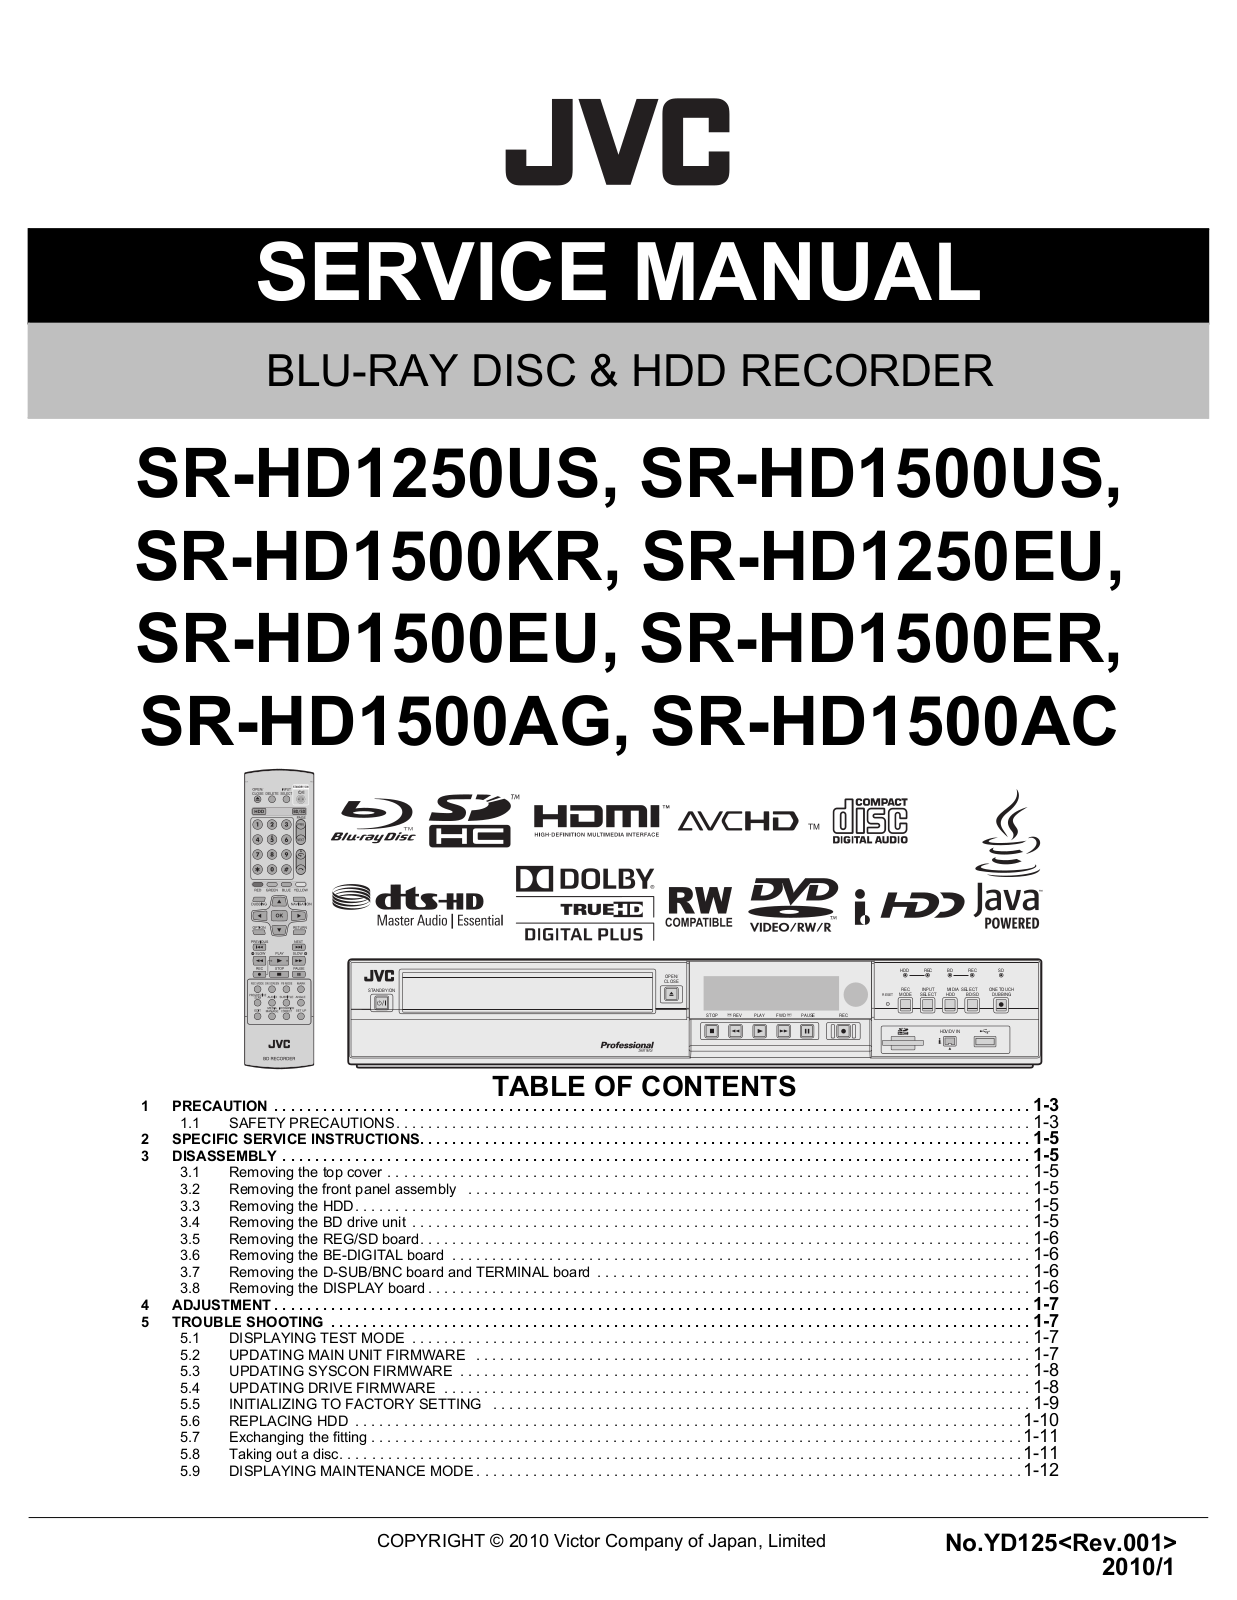 Jvc SR-HD1500-US, SR-HD1500-KR, SR-HD1500-EU, SR-HD1500-AG, SR-HD1500-AC Service Manual